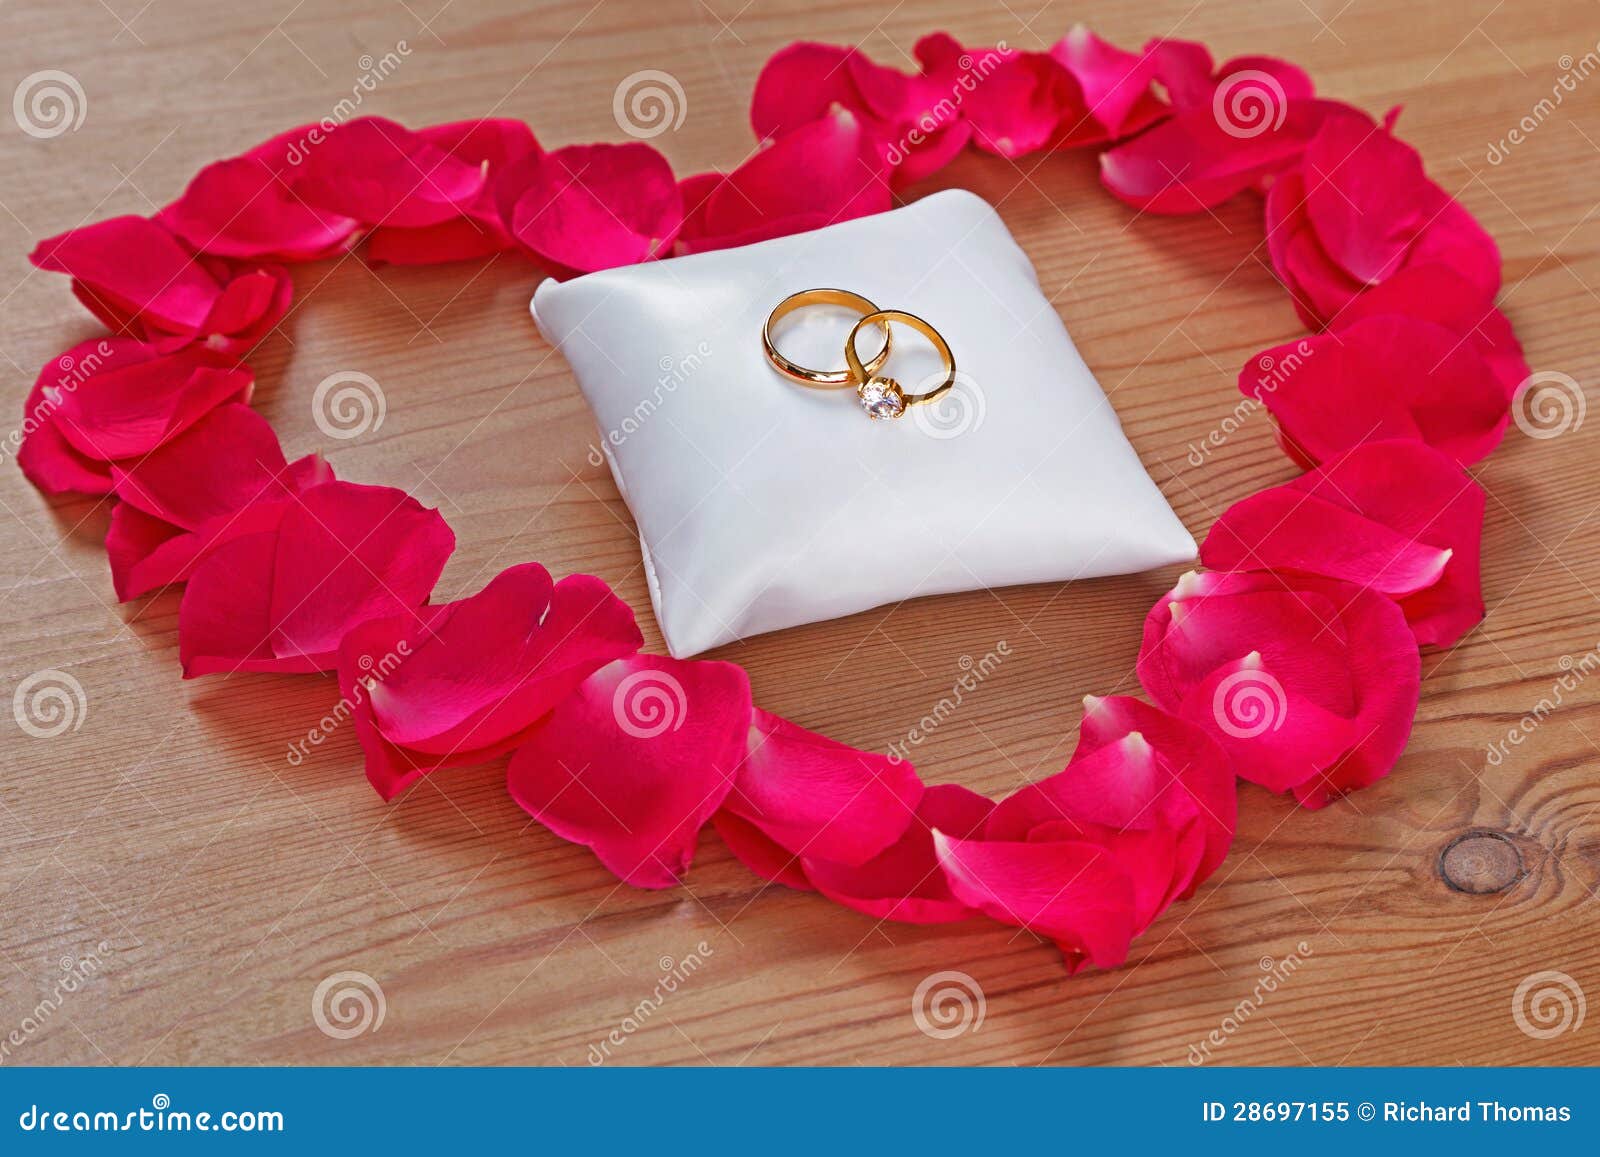 wedding rings on single rose petal